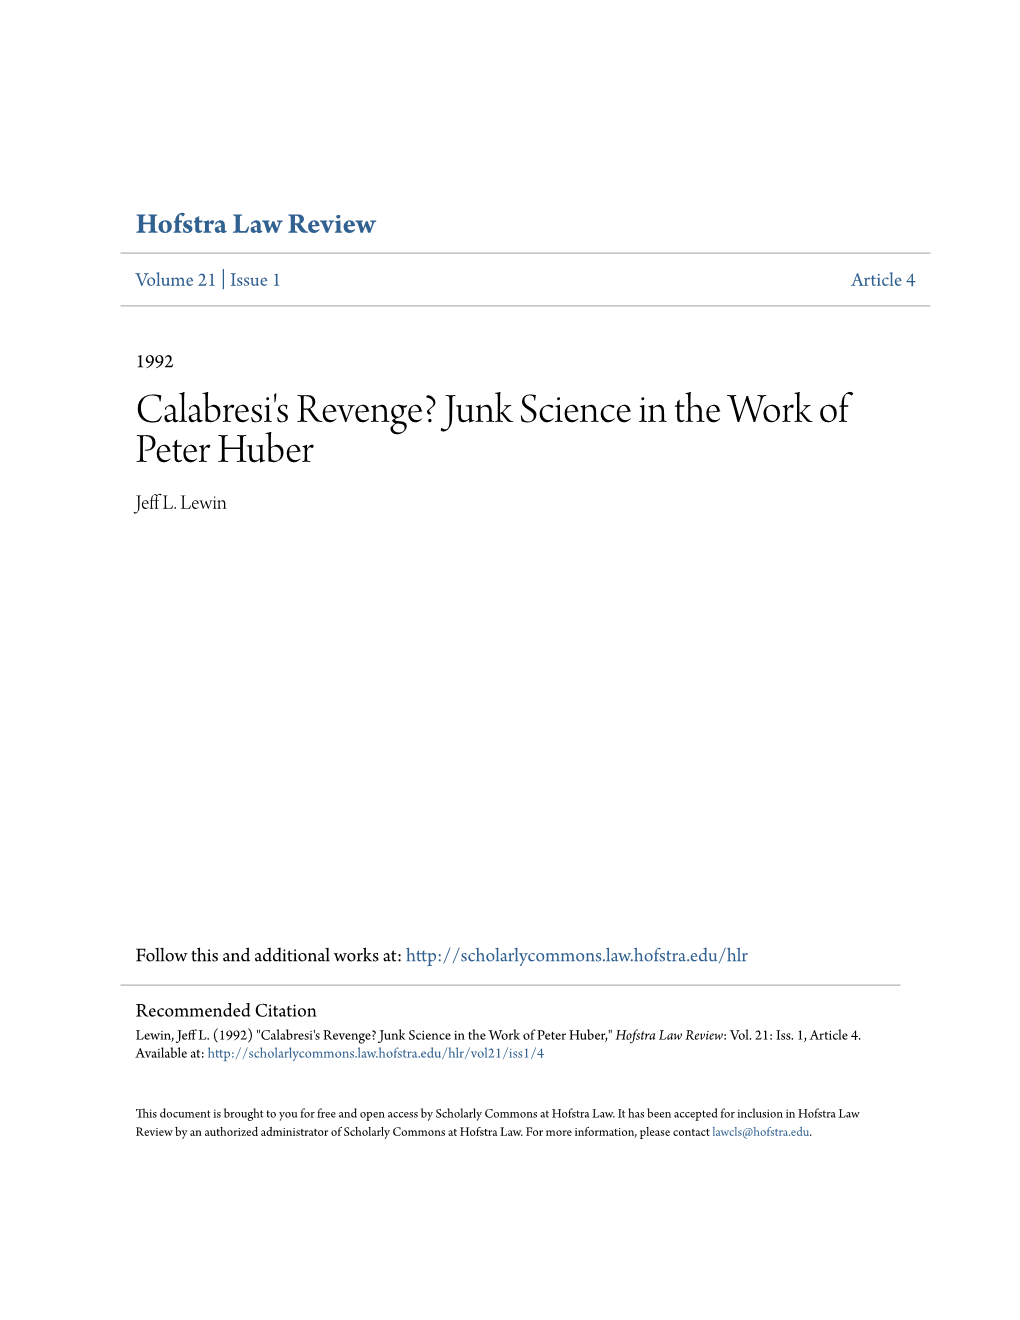 Calabresi's Revenge? Junk Science in the Work of Peter Huber Jeff L